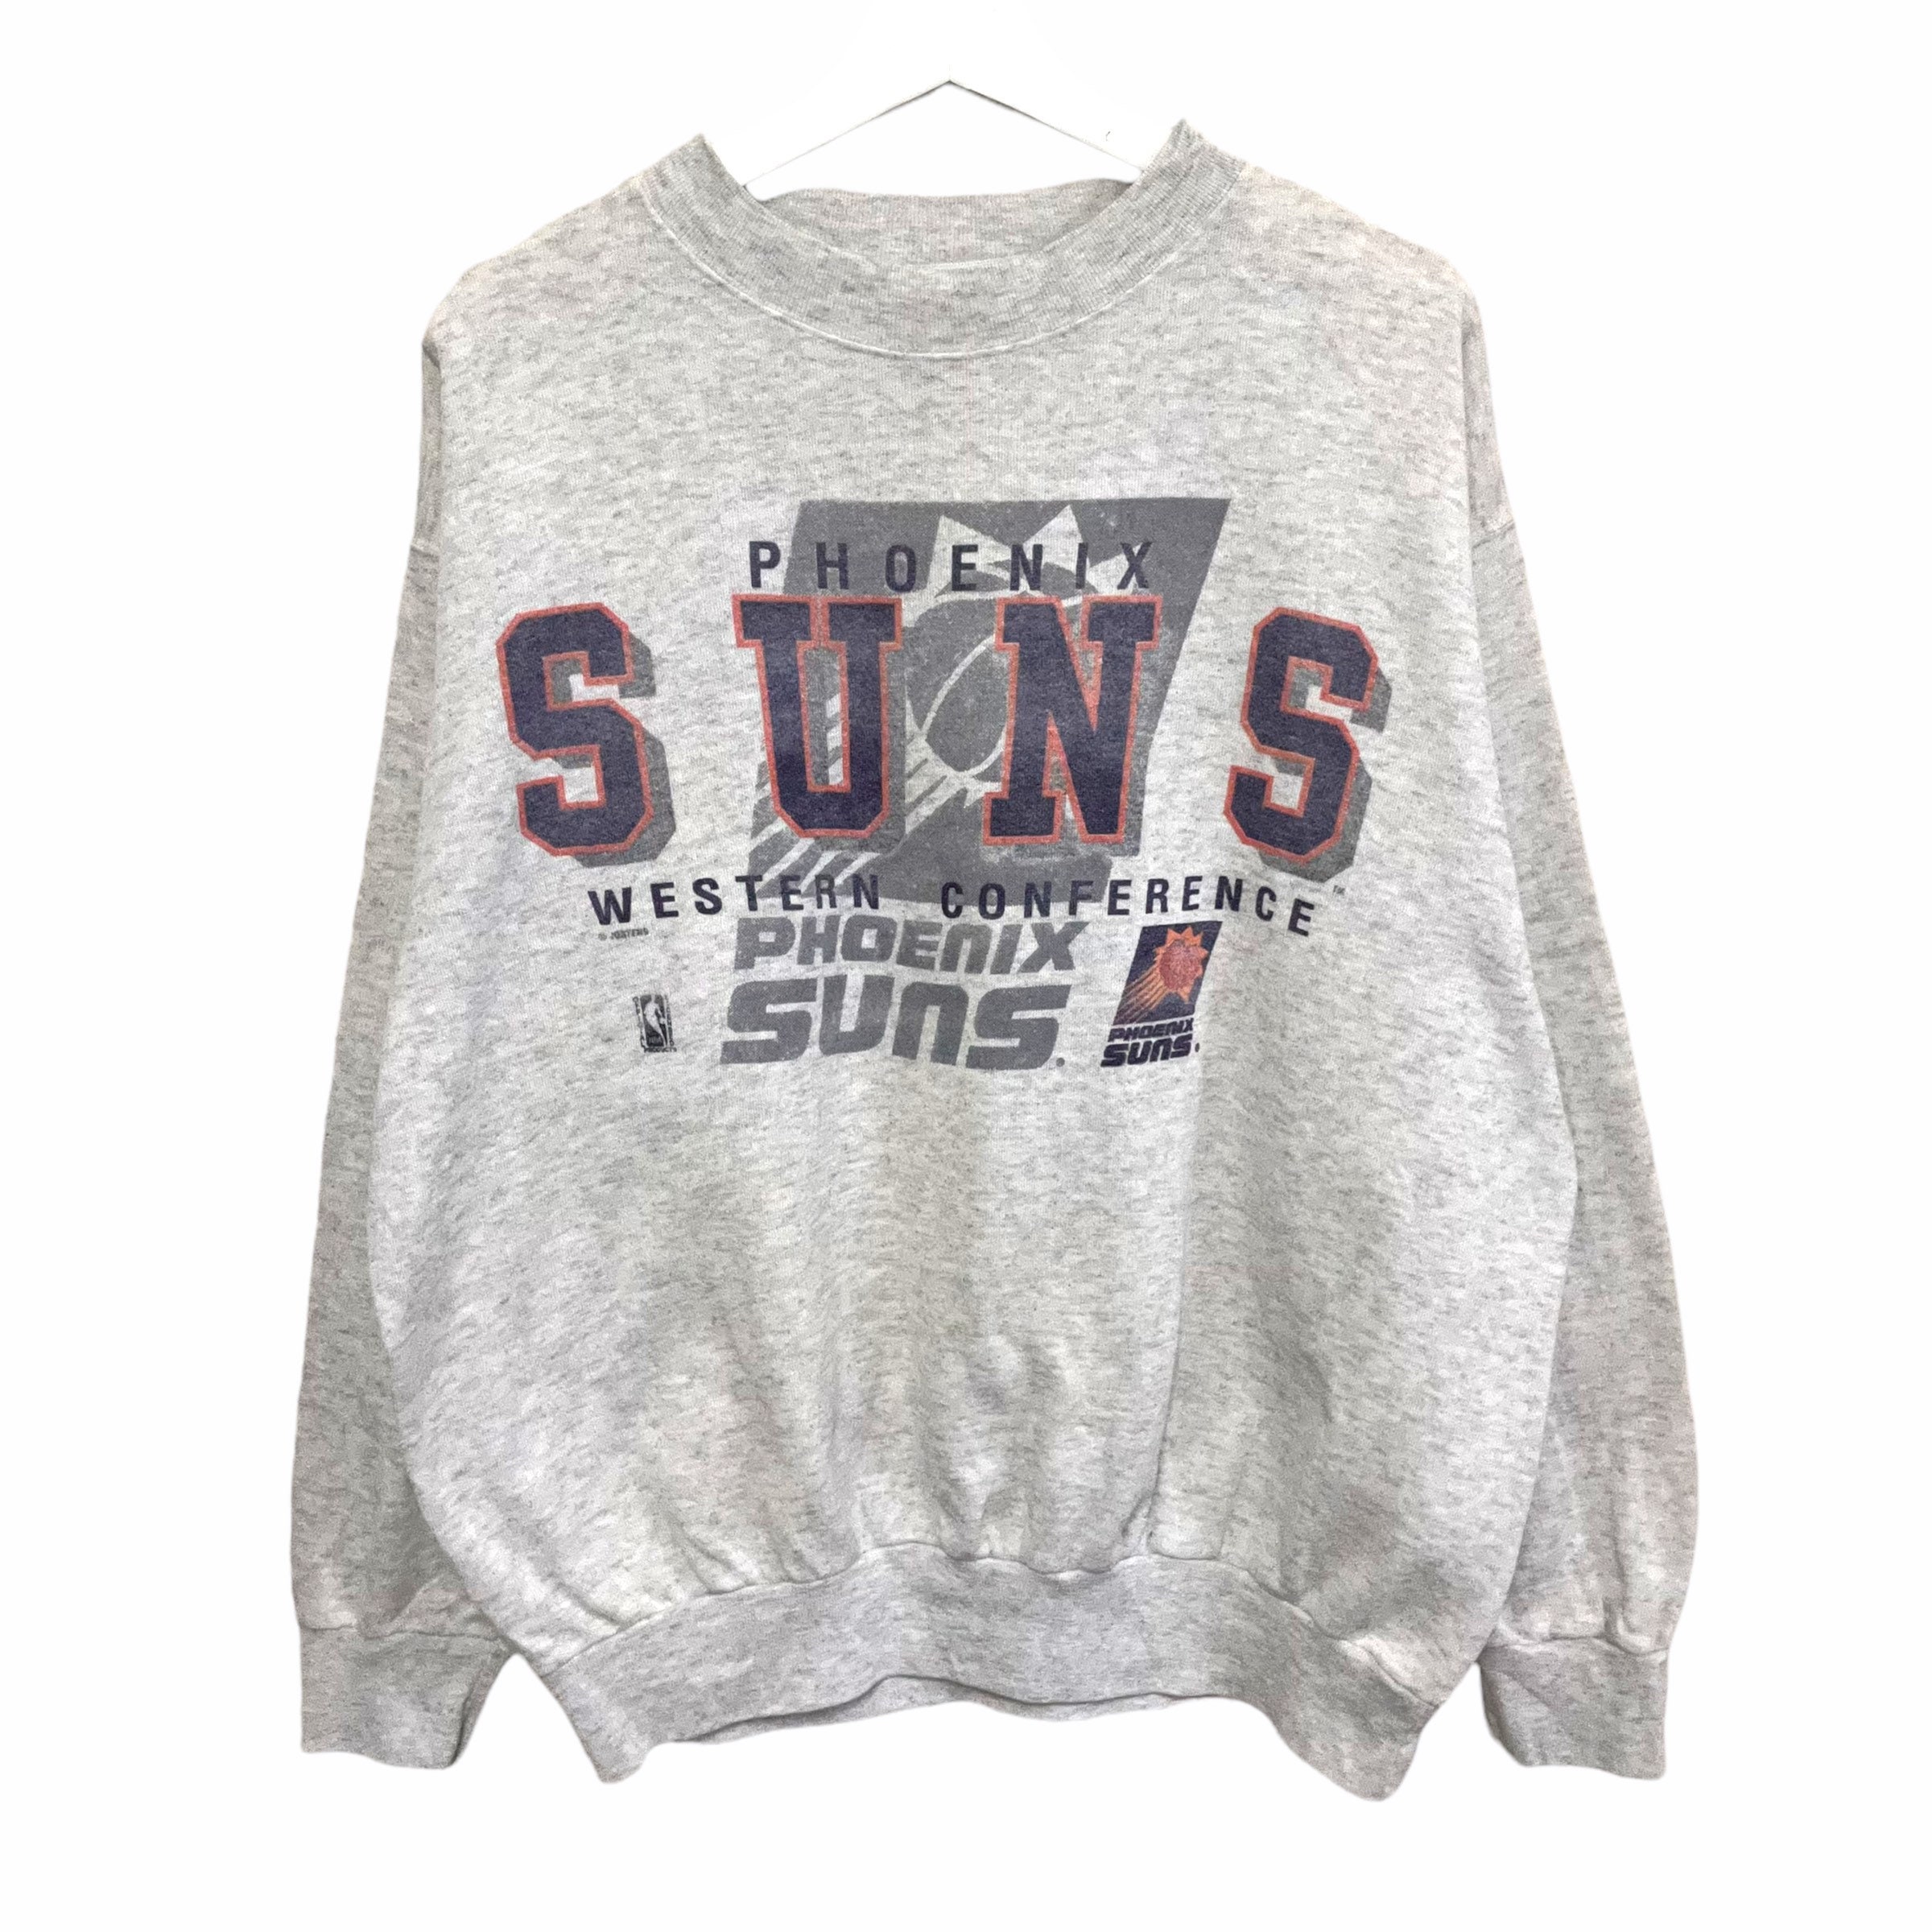 PICK Vintage 90s NBA Phoenix Suns Sweatshirt Made in USA -  Denmark